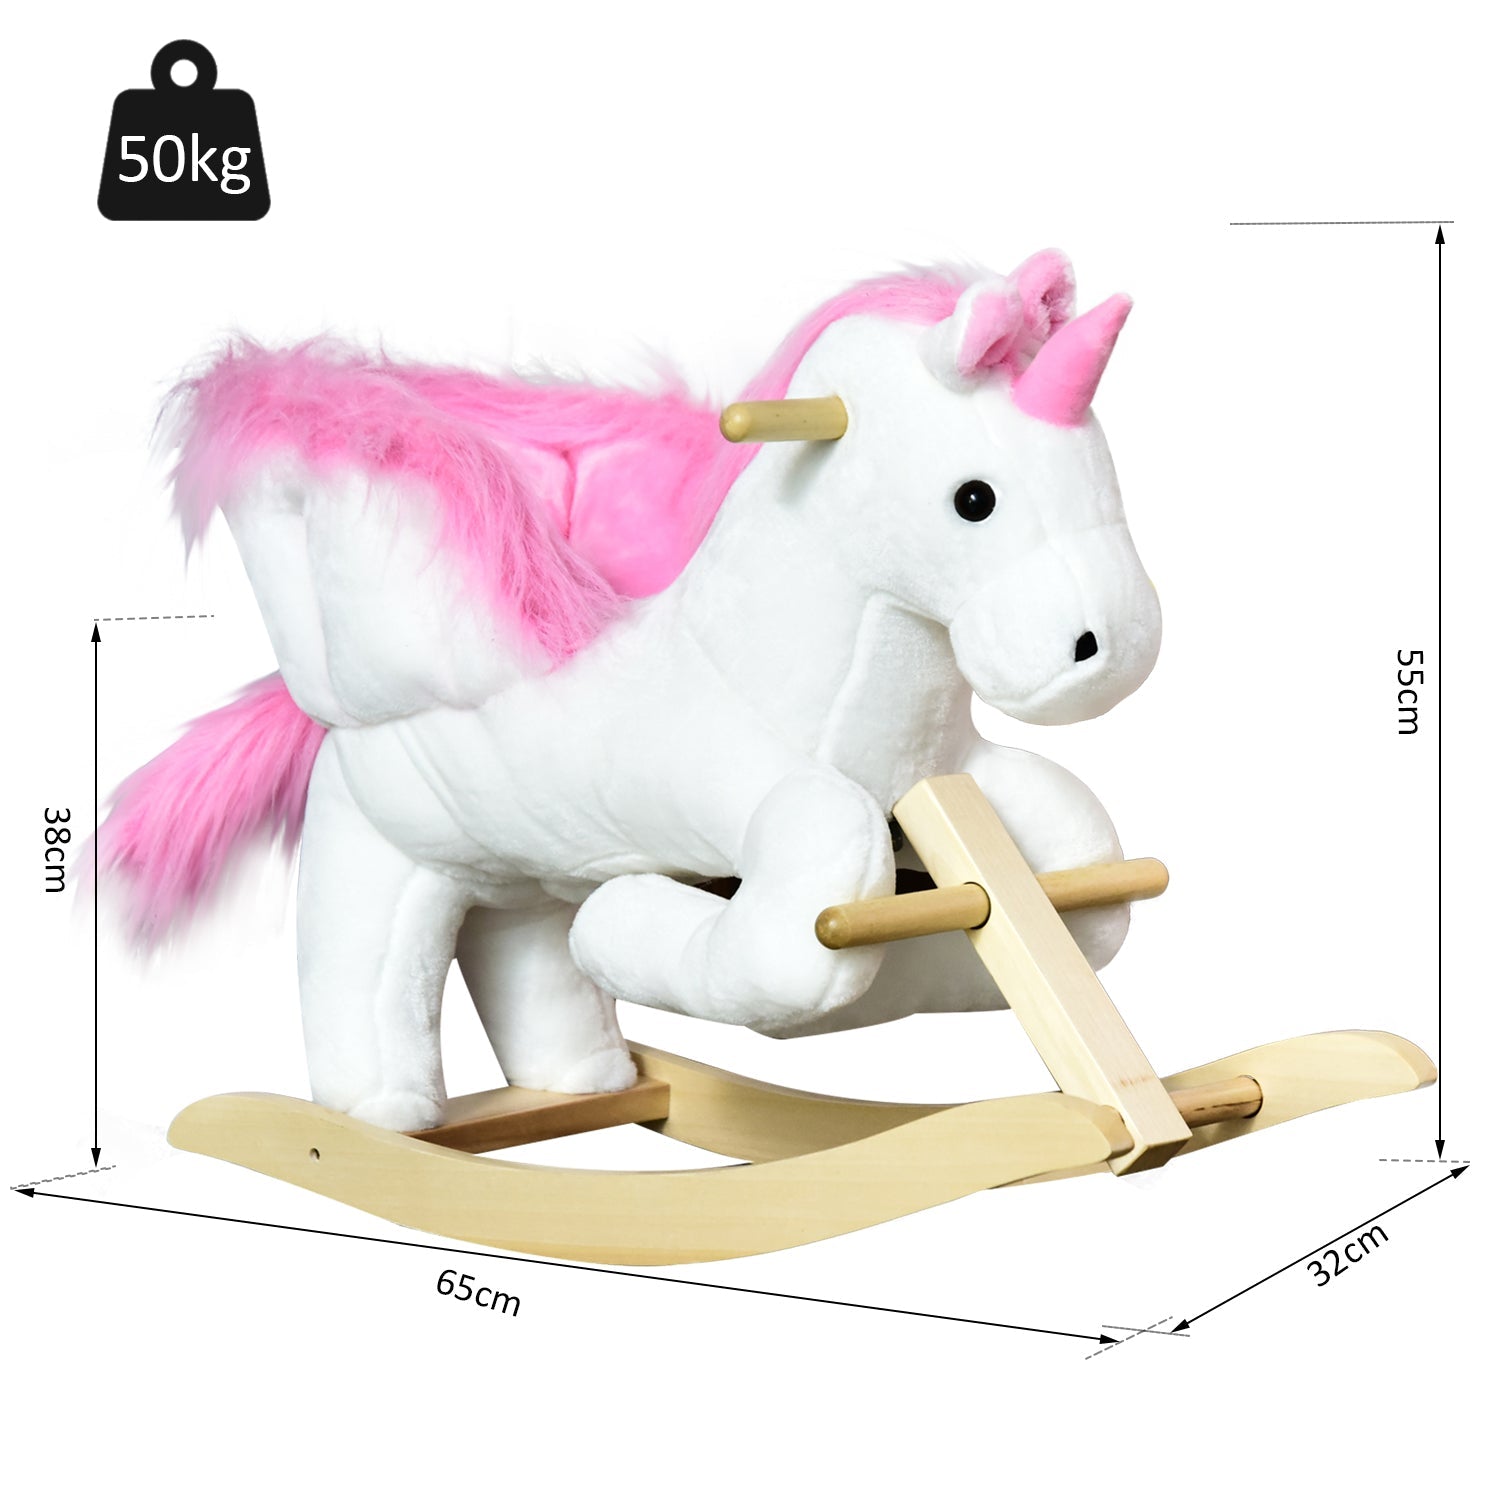 Unicorn Rocking Horse Kids Wooden Ride On Plush Toy w/ Music-2